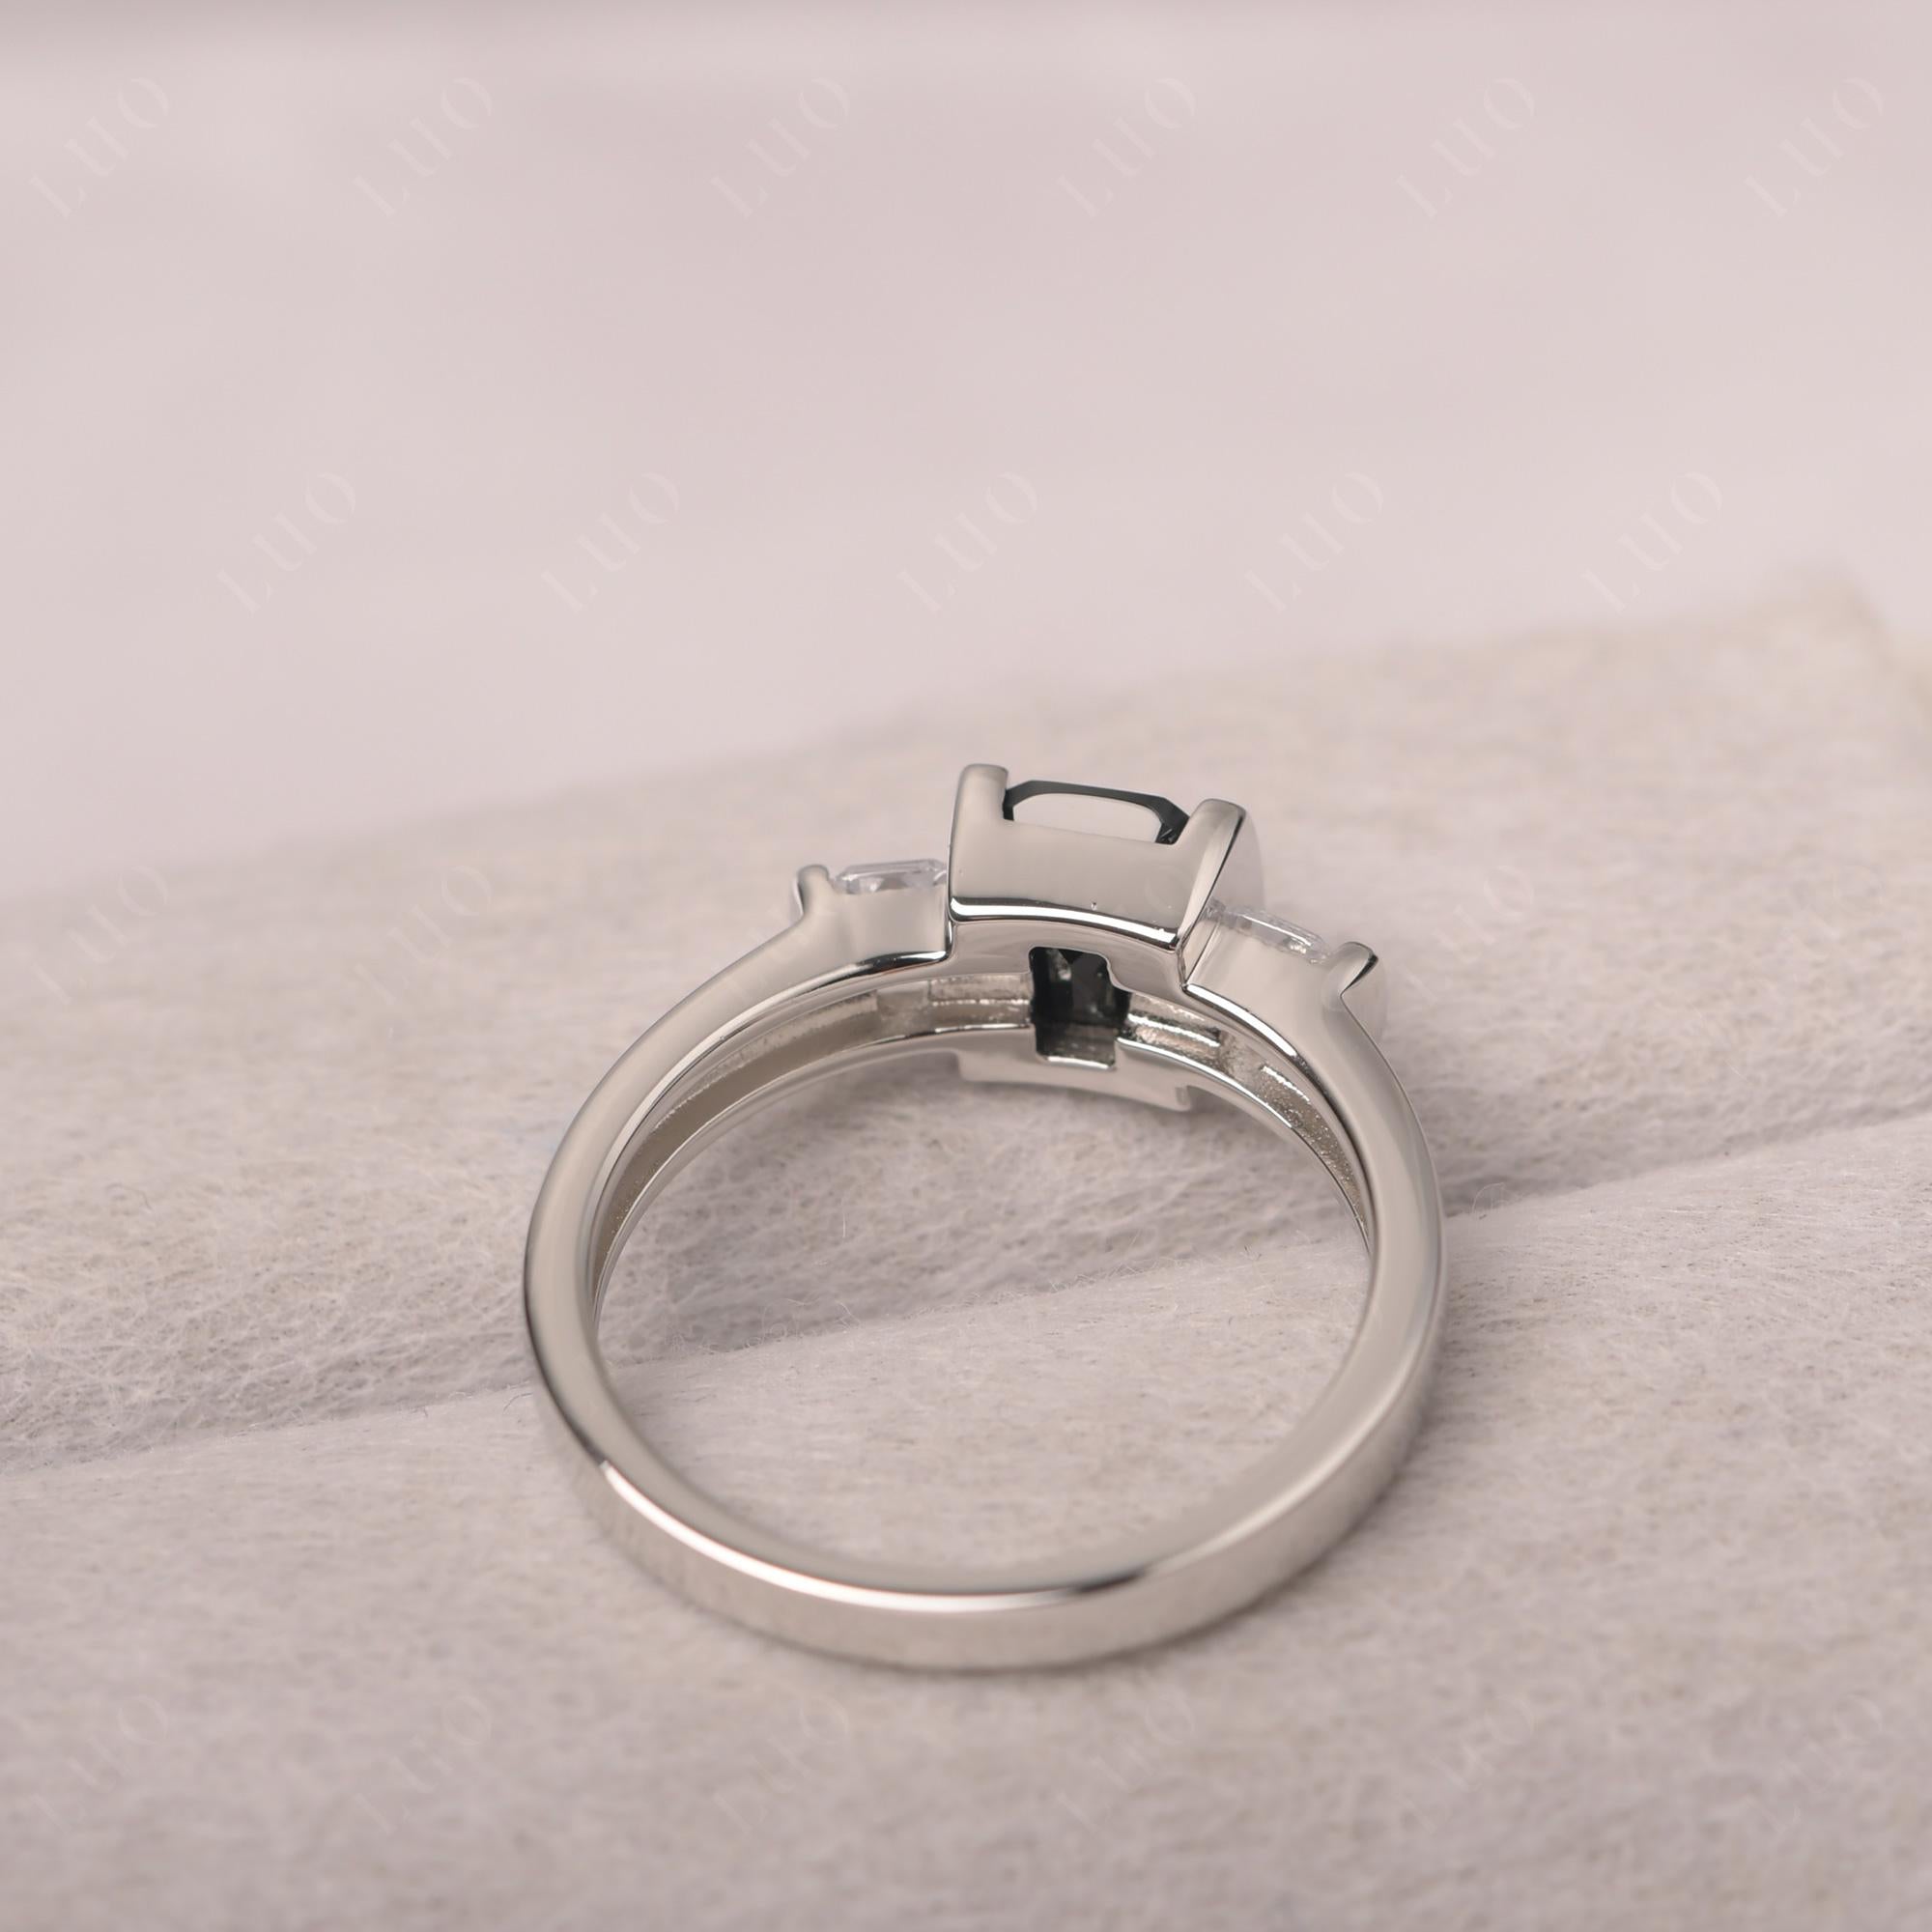 Vintage Black Stone Ring Bezel Set Emerald Cut Ring - LUO Jewelry